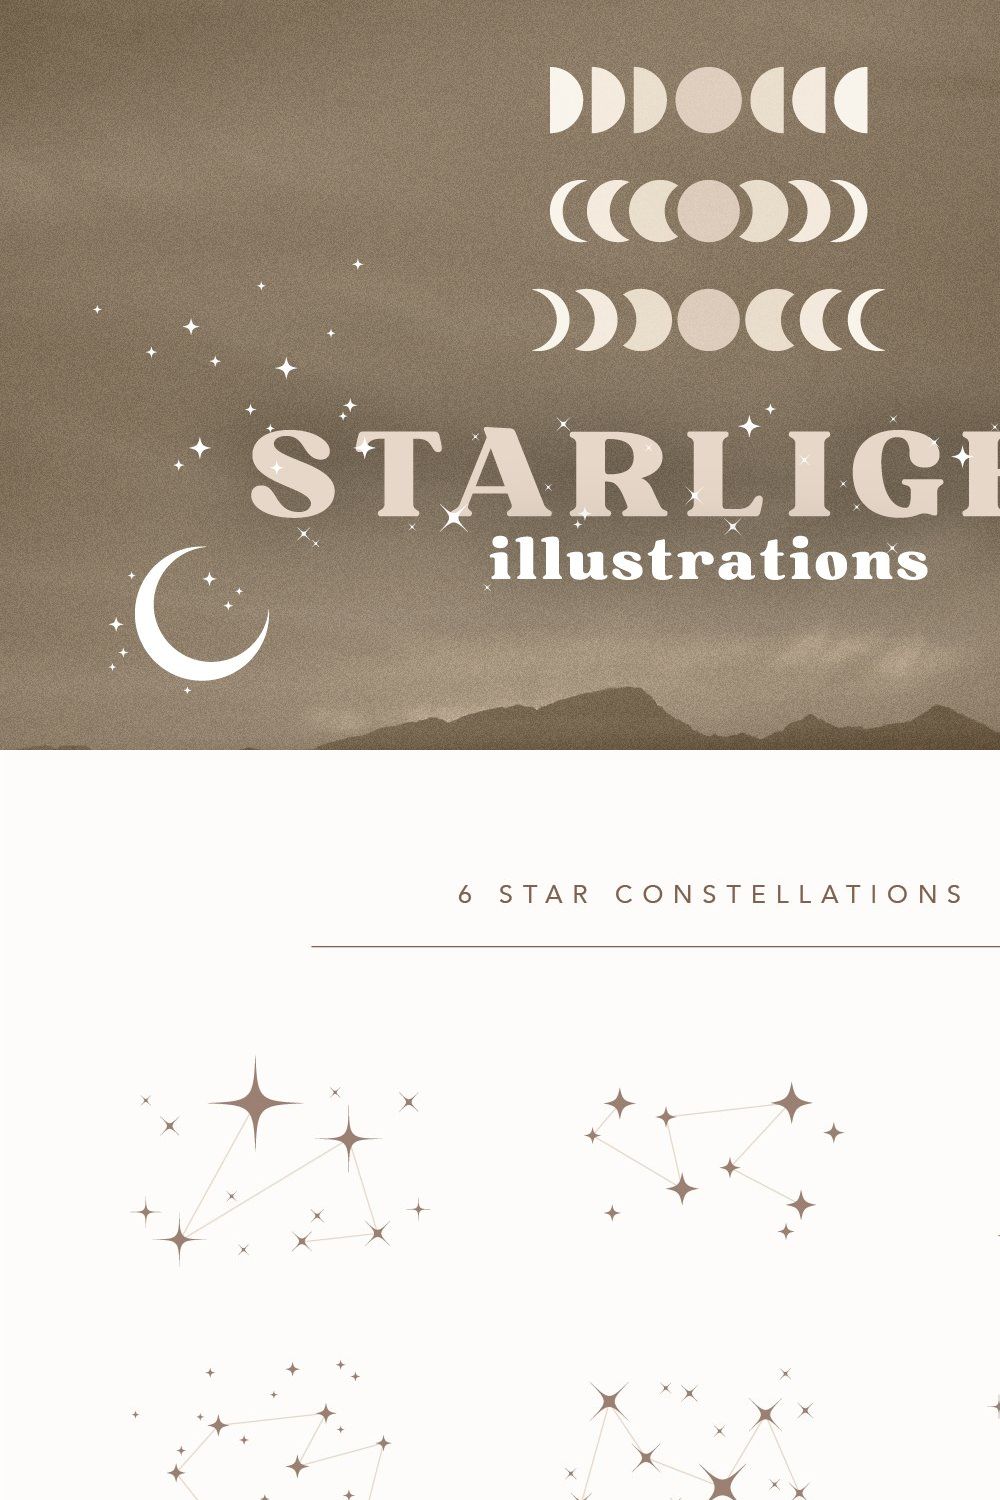 starlight illustrations pinterest preview image.